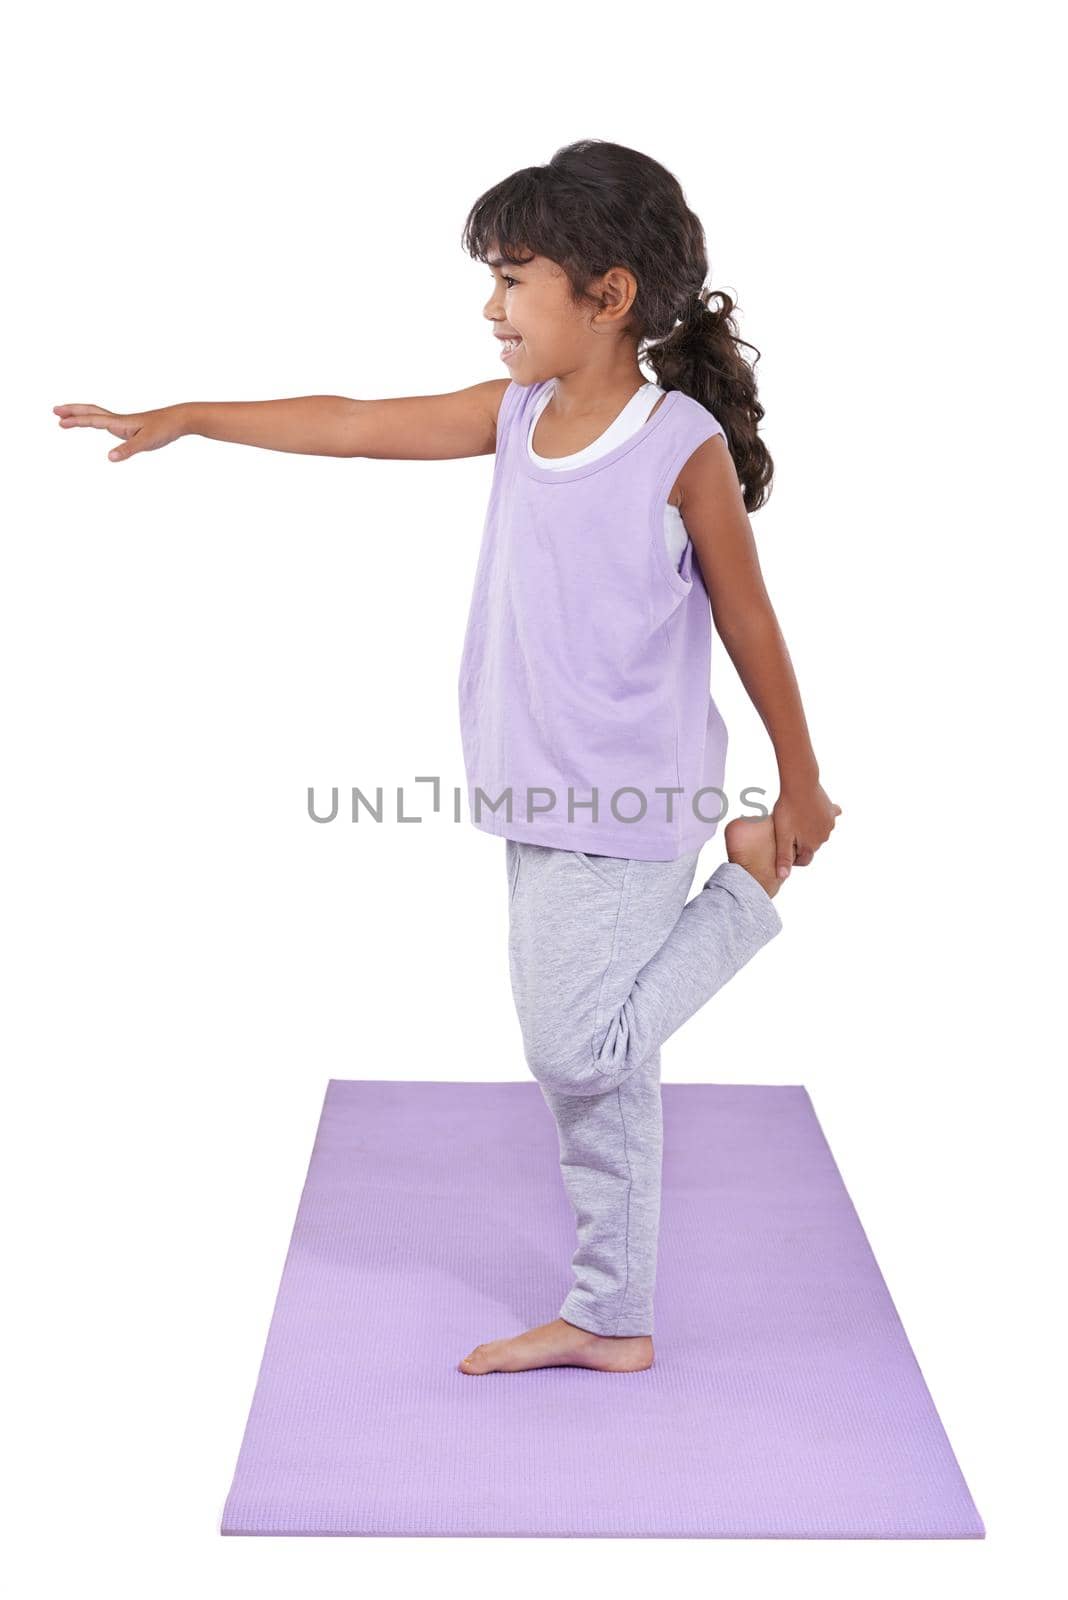 An adorable little girl practicing yoga.